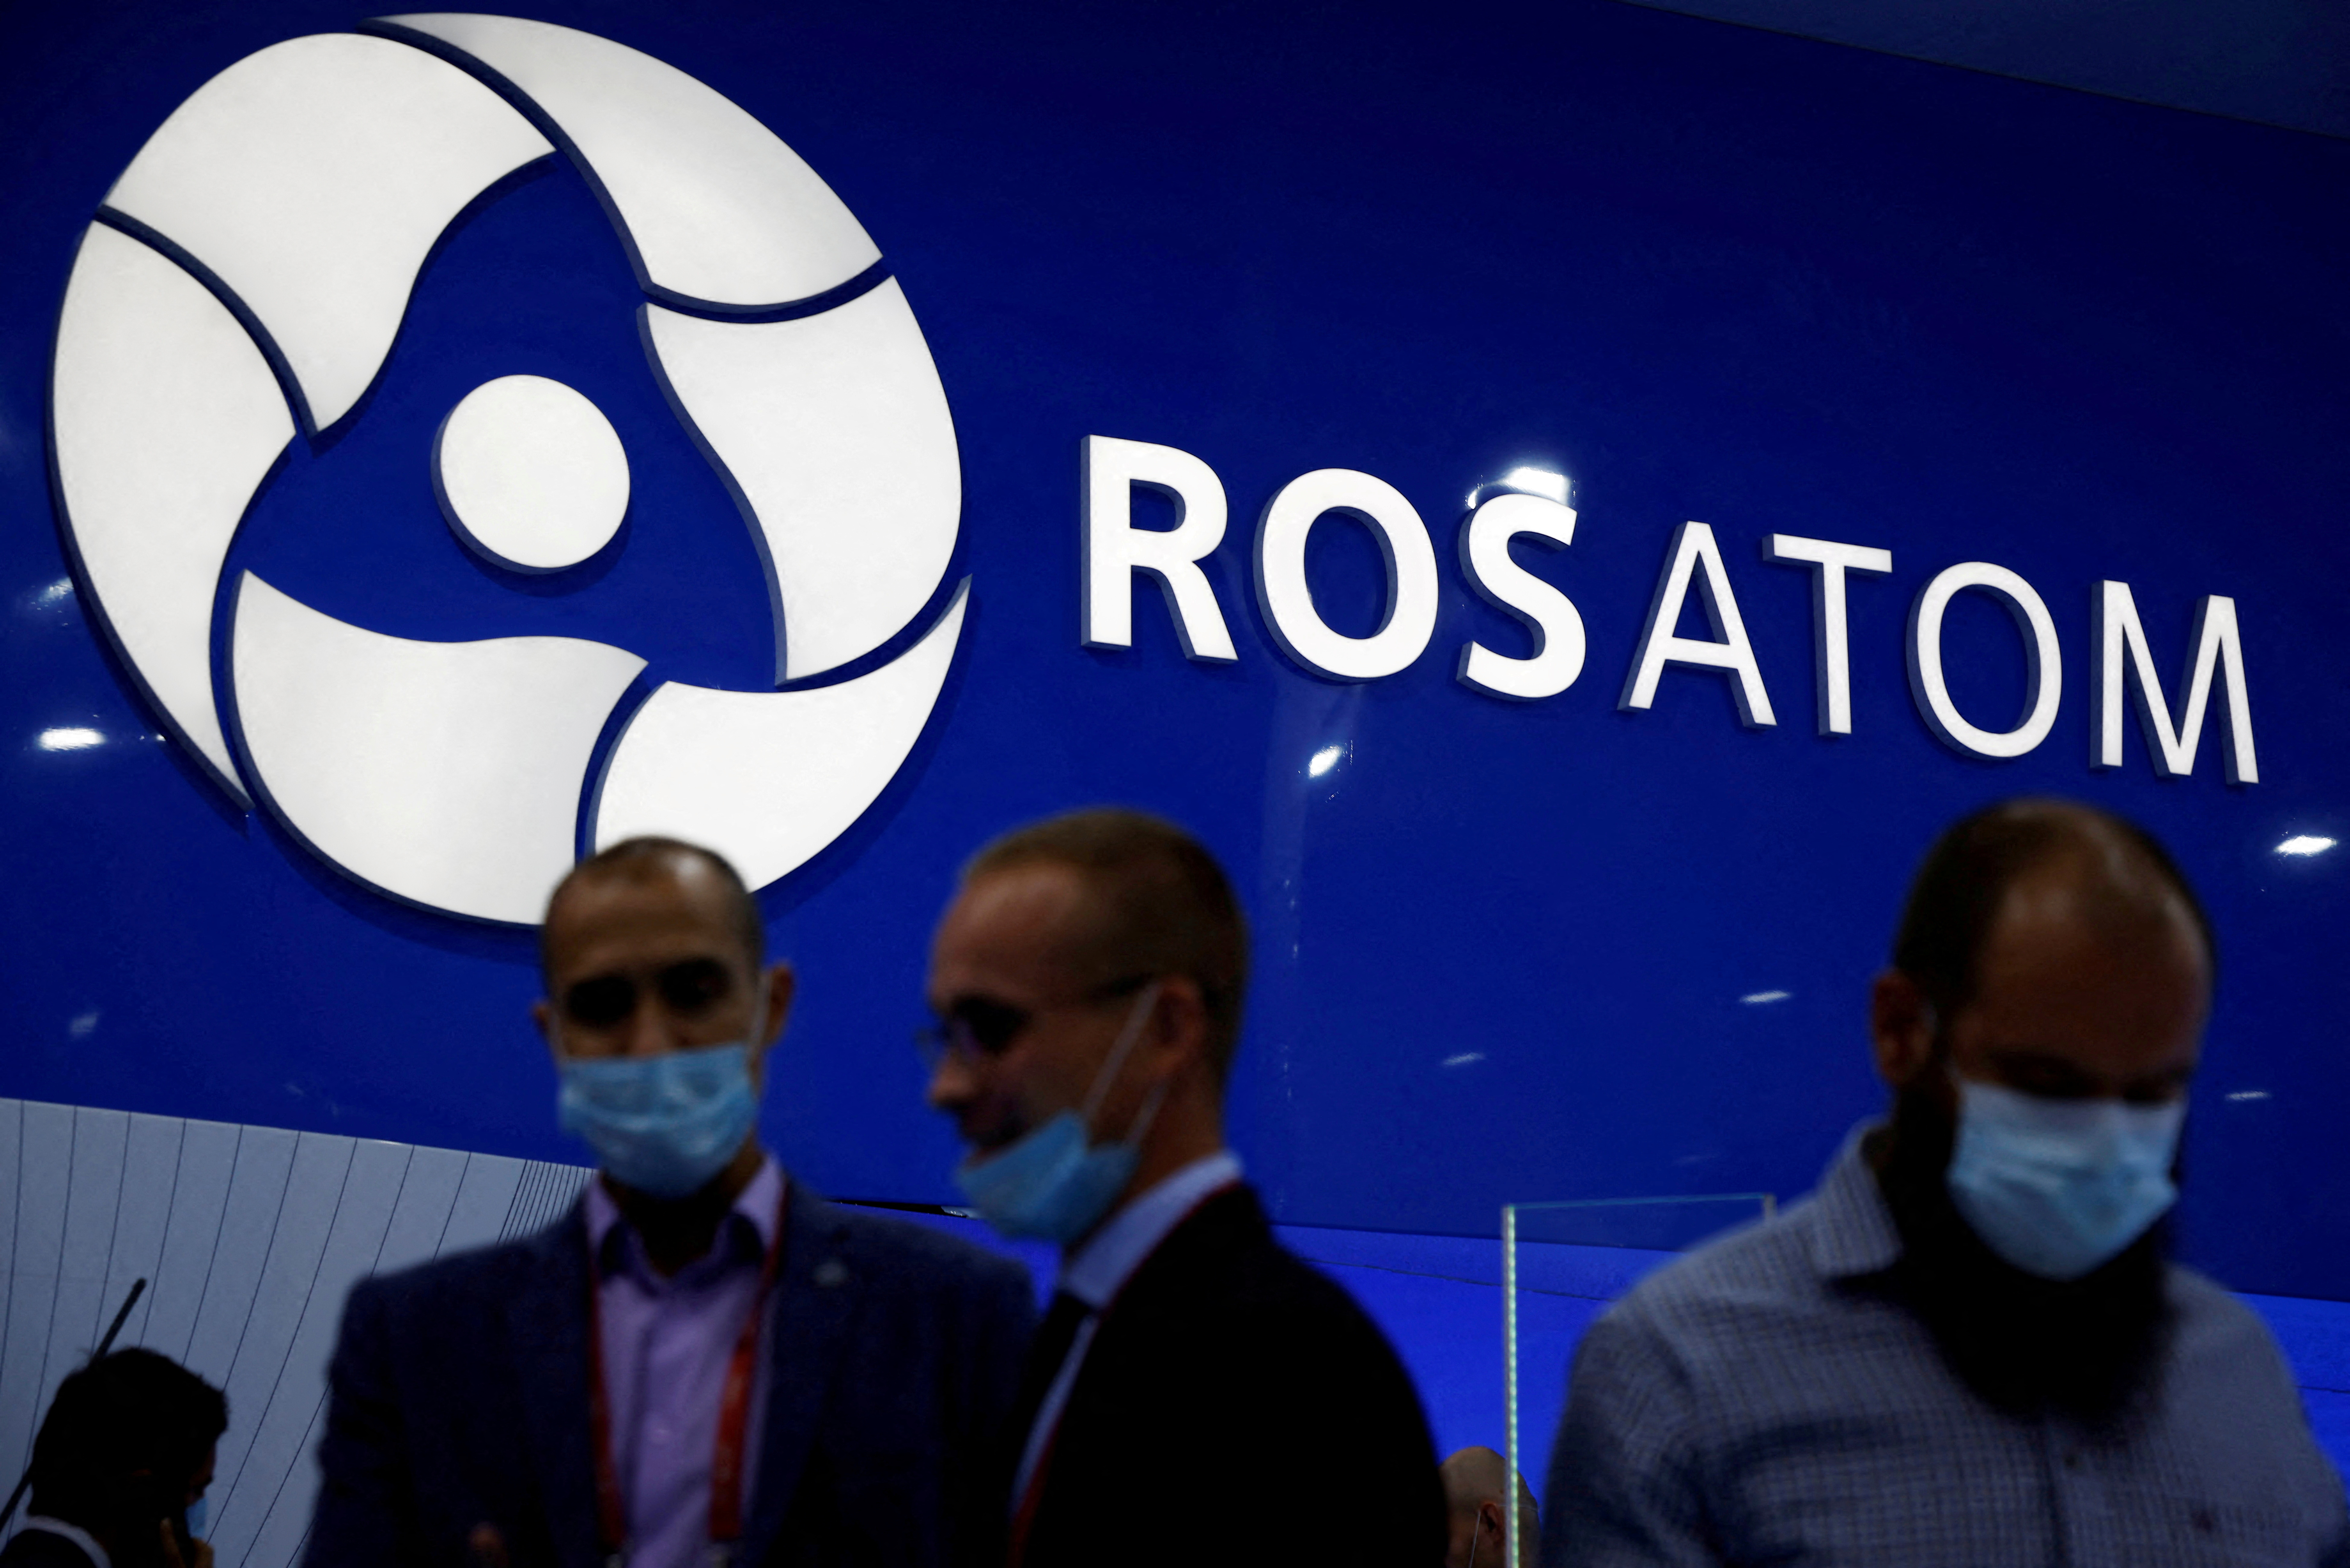 Rosatom's logo